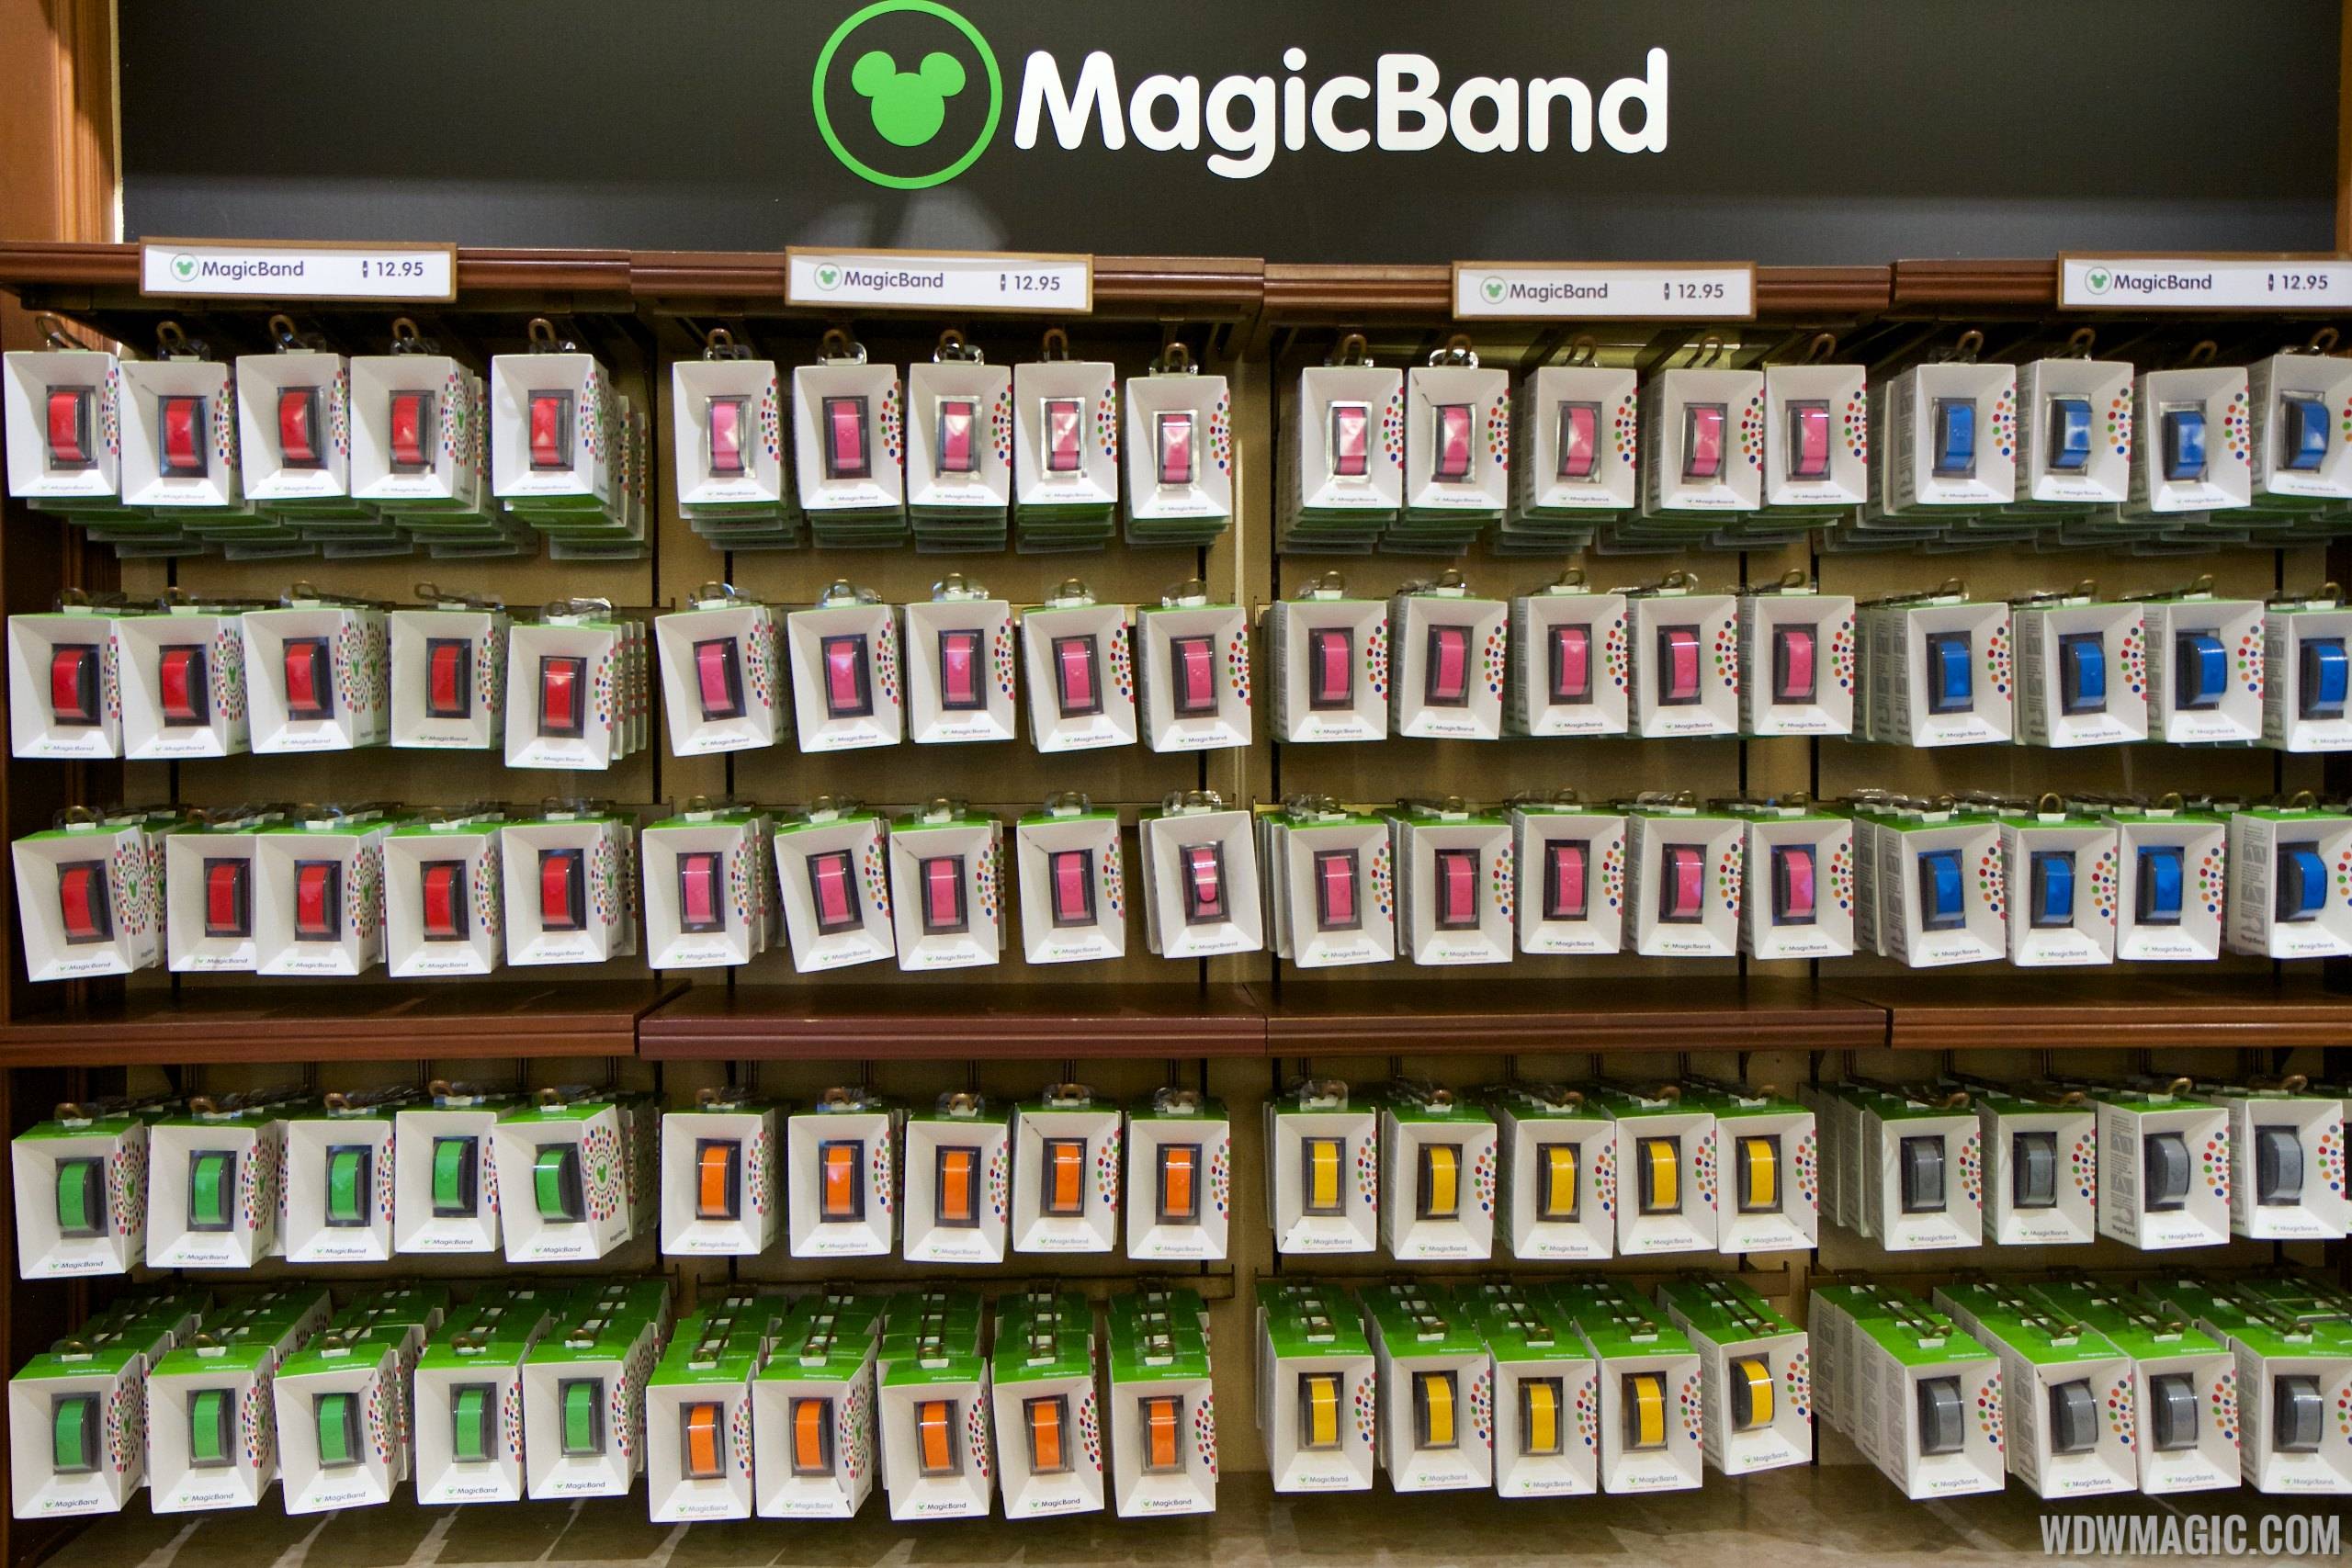 MagicBand retail display at the Magic Kingdom's Emporium